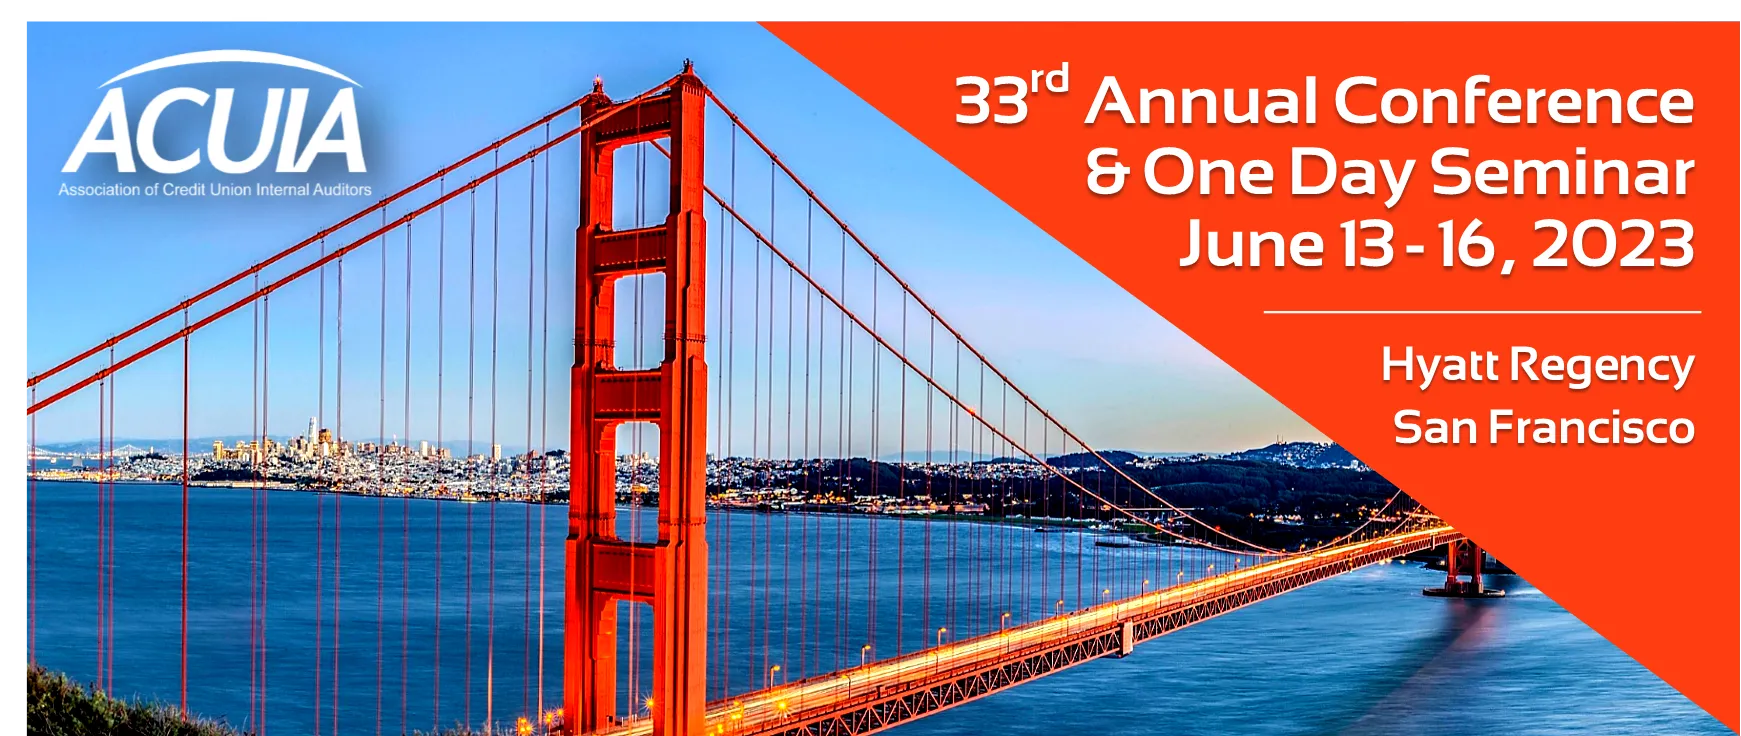 ACUIA: Association of Credit Union Internal Auditors. 33rd Annual Conference & One Day Seminar. June 13-16, 2023. Hyatt Regency, San Francisco